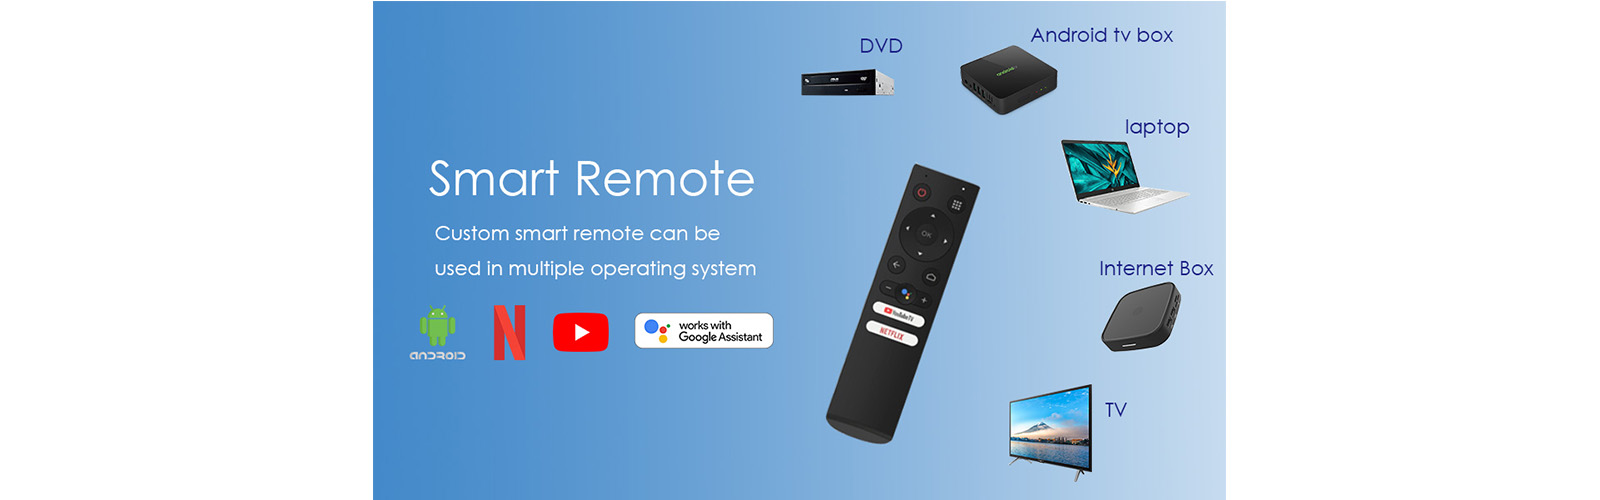 2.4 G blutetooth smart remote control